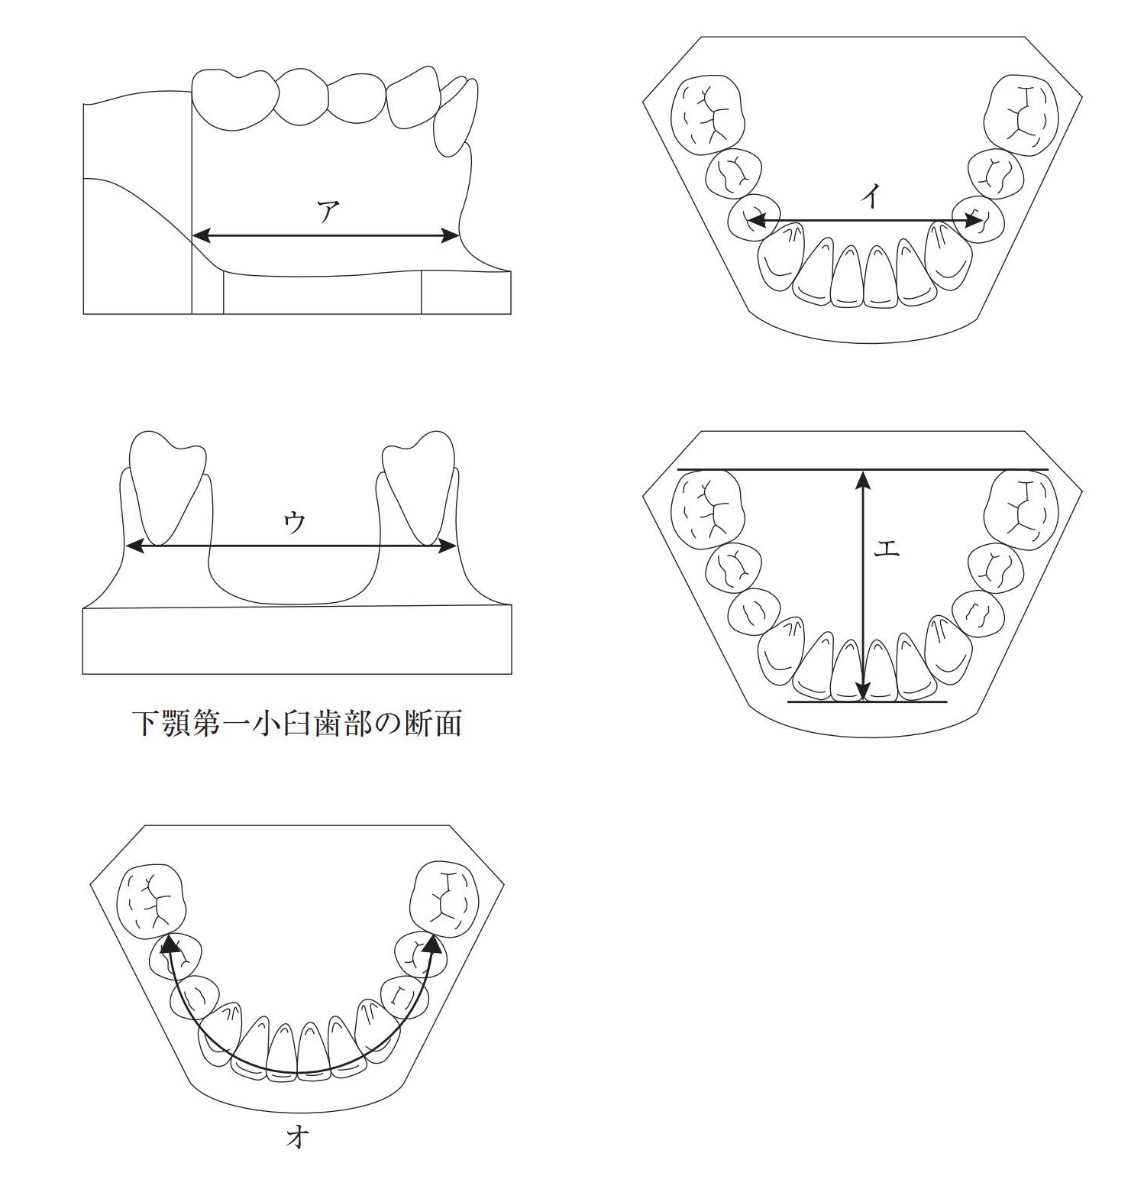 口腔模型の模式図